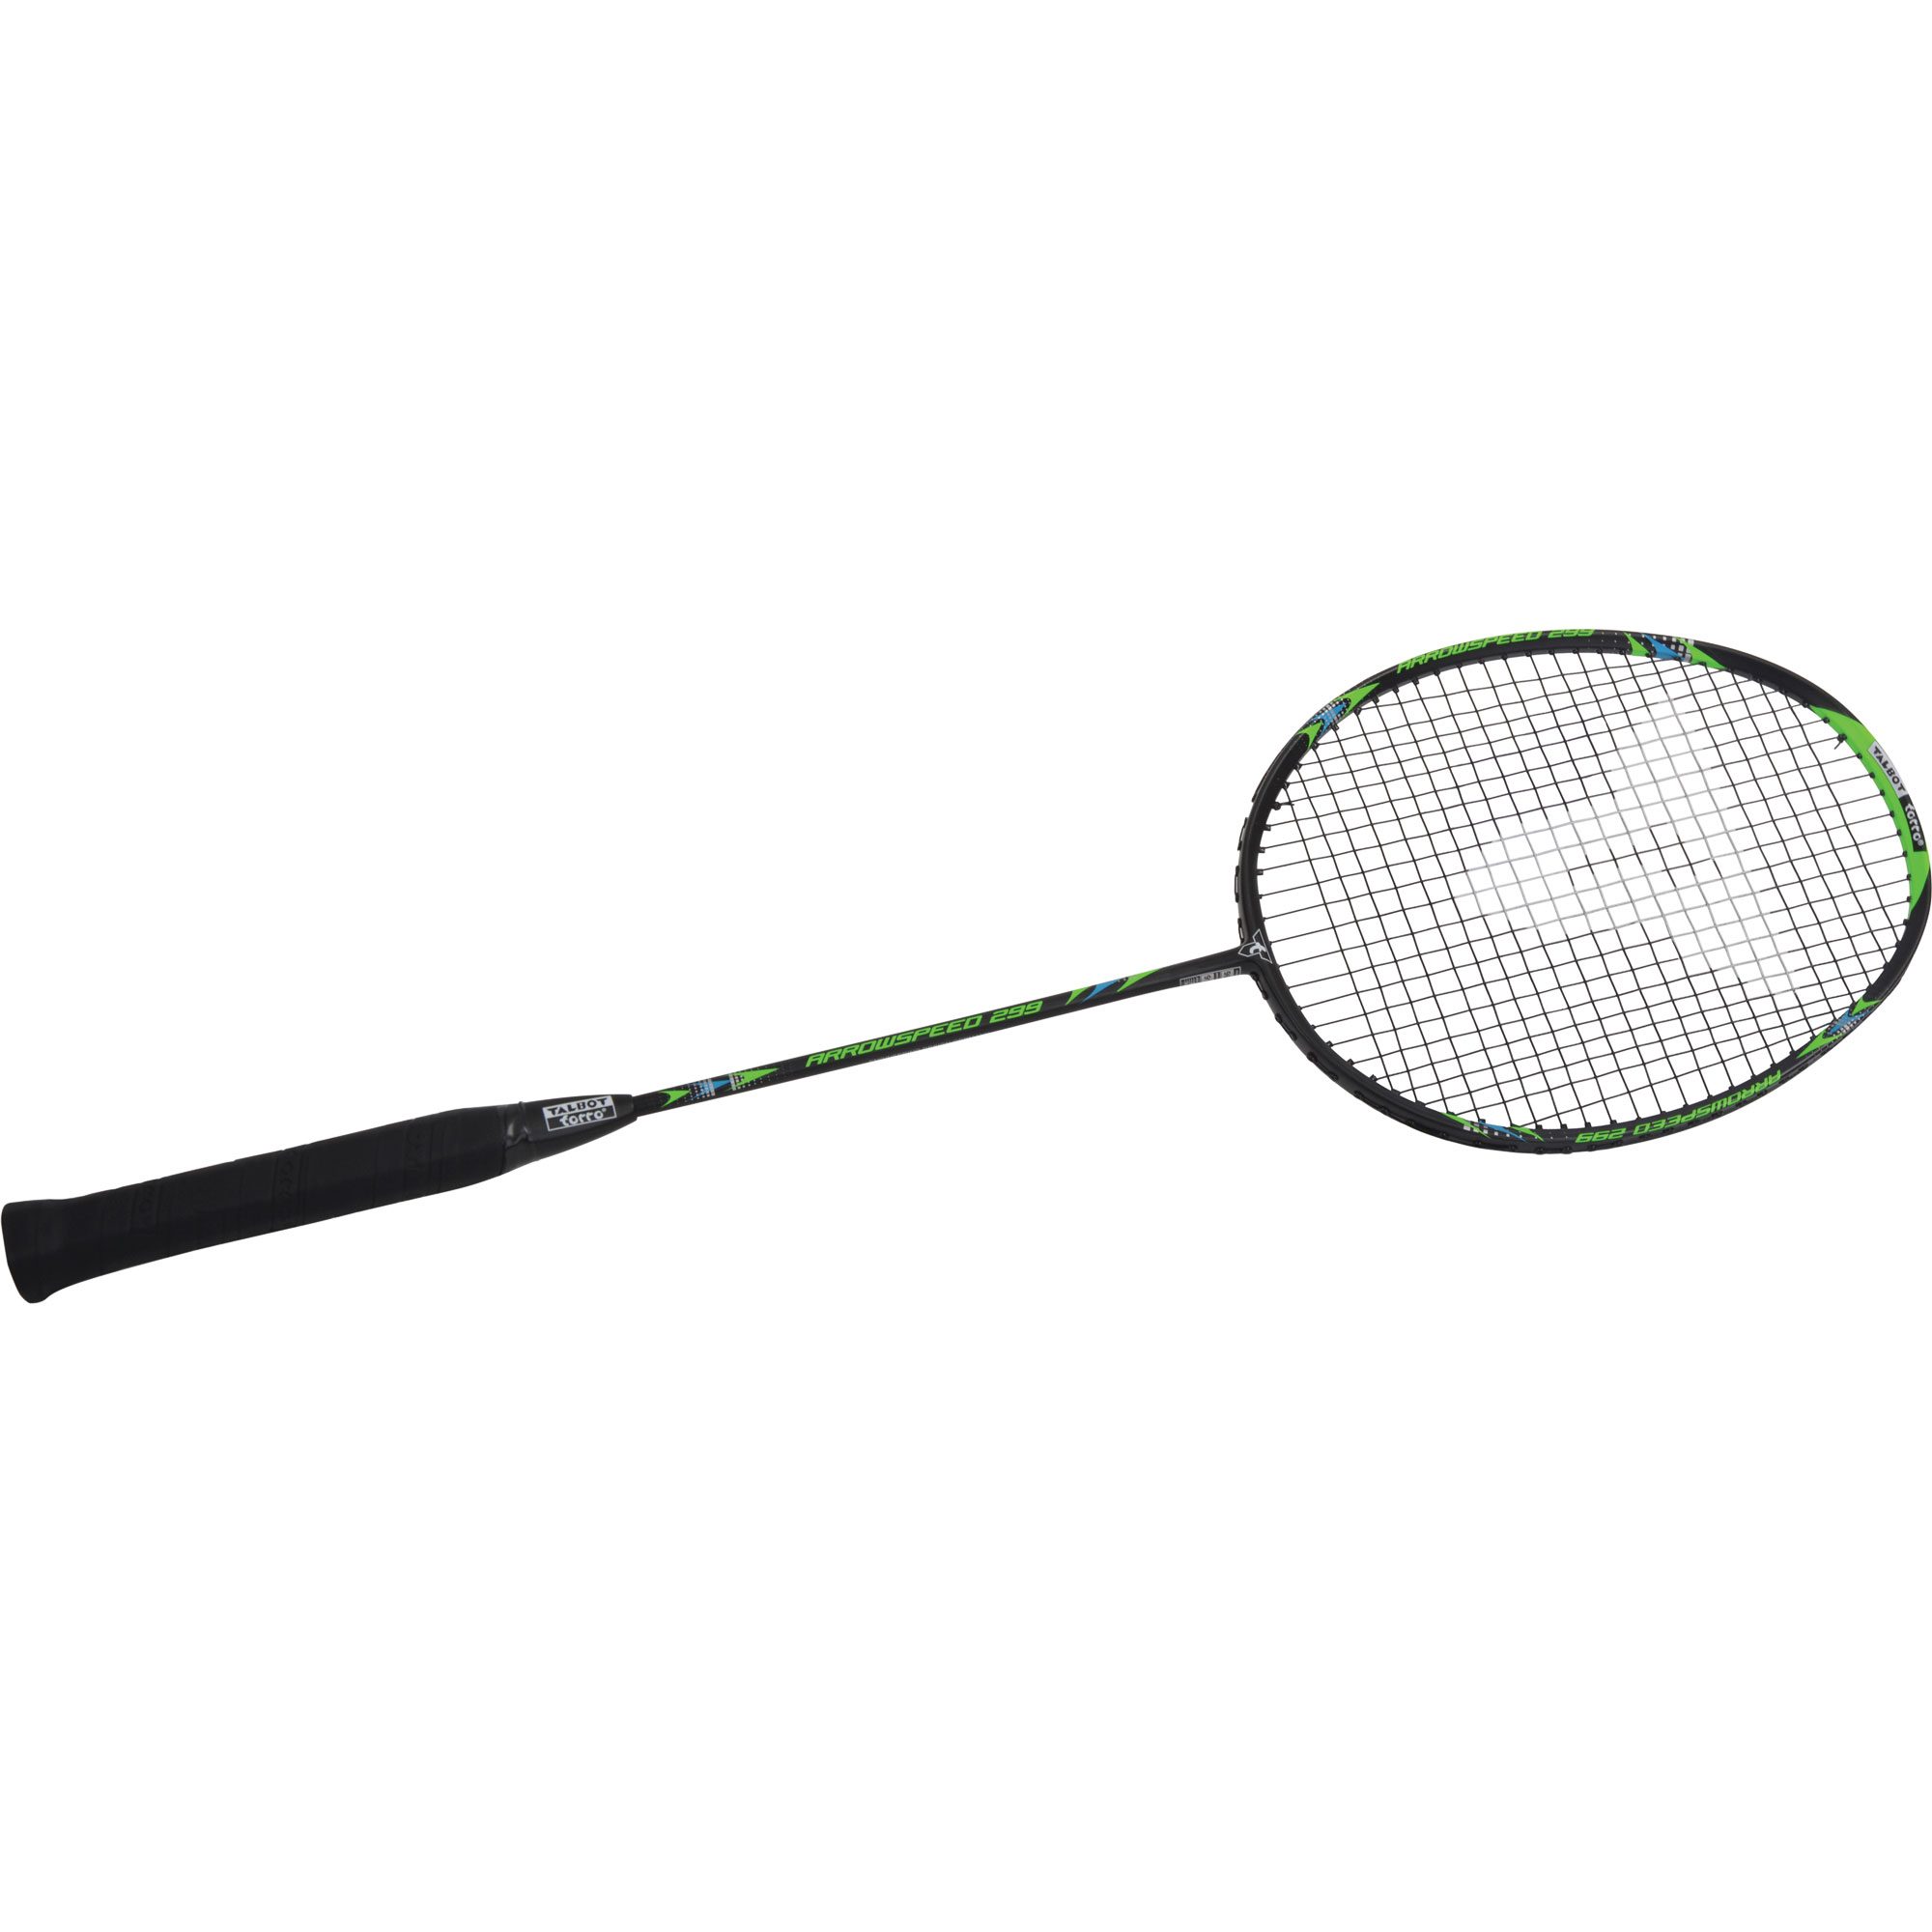 Arrowspeed 299 Badmintonschläger besaitet schwarz